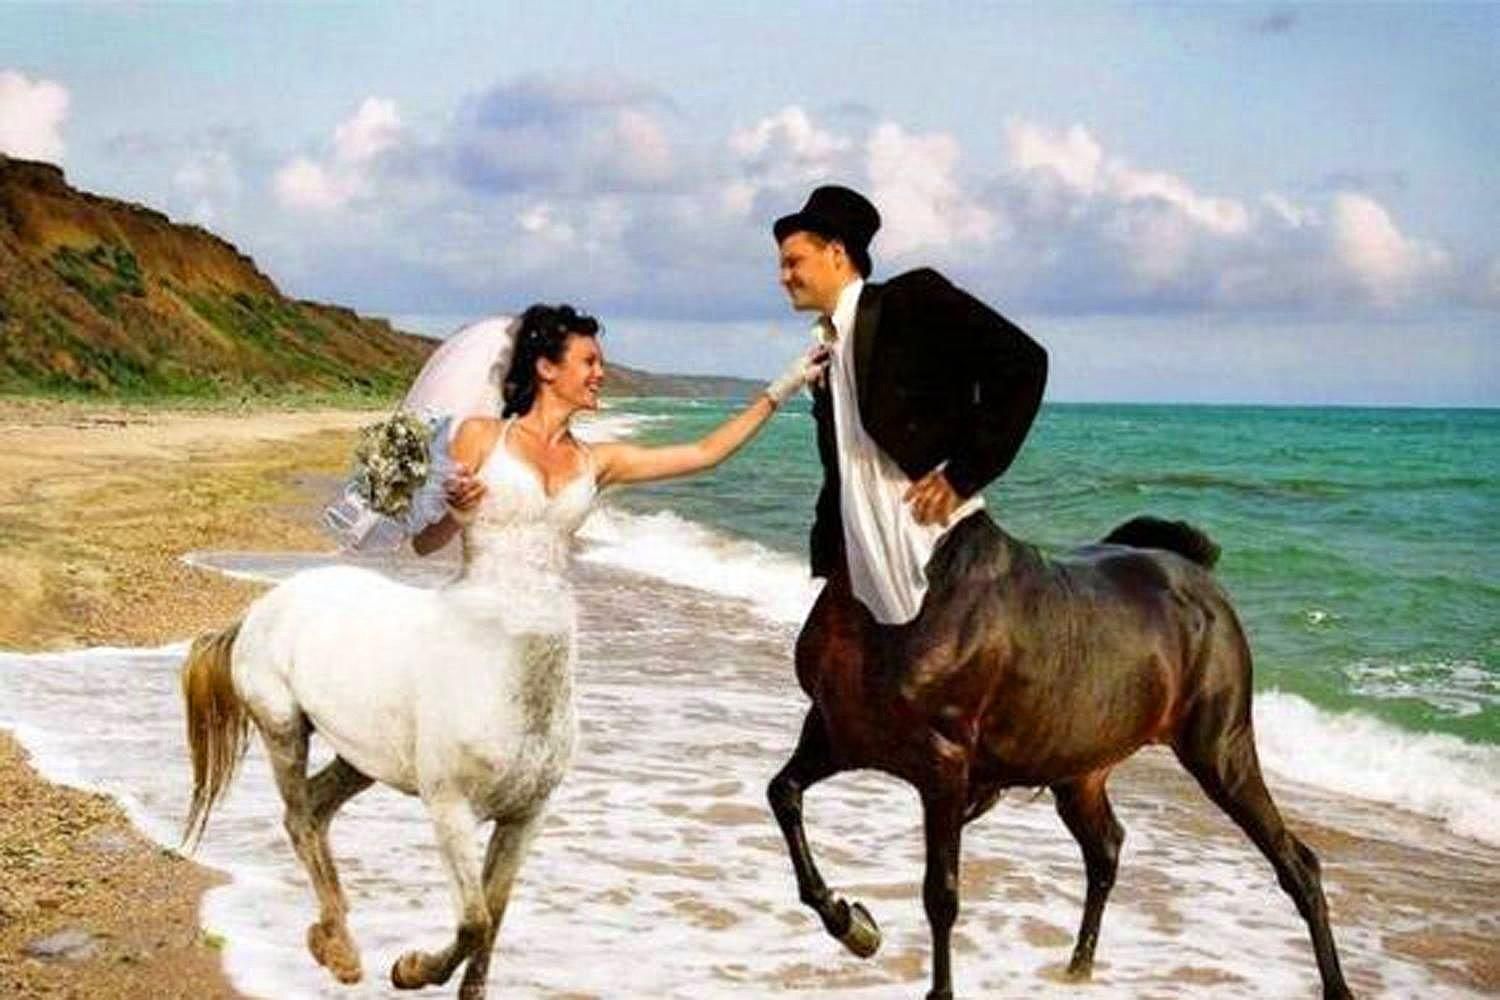 http://www.laughspark.info/uploadfiles/bad-funny-russian-wedding-phot-5412.jpg